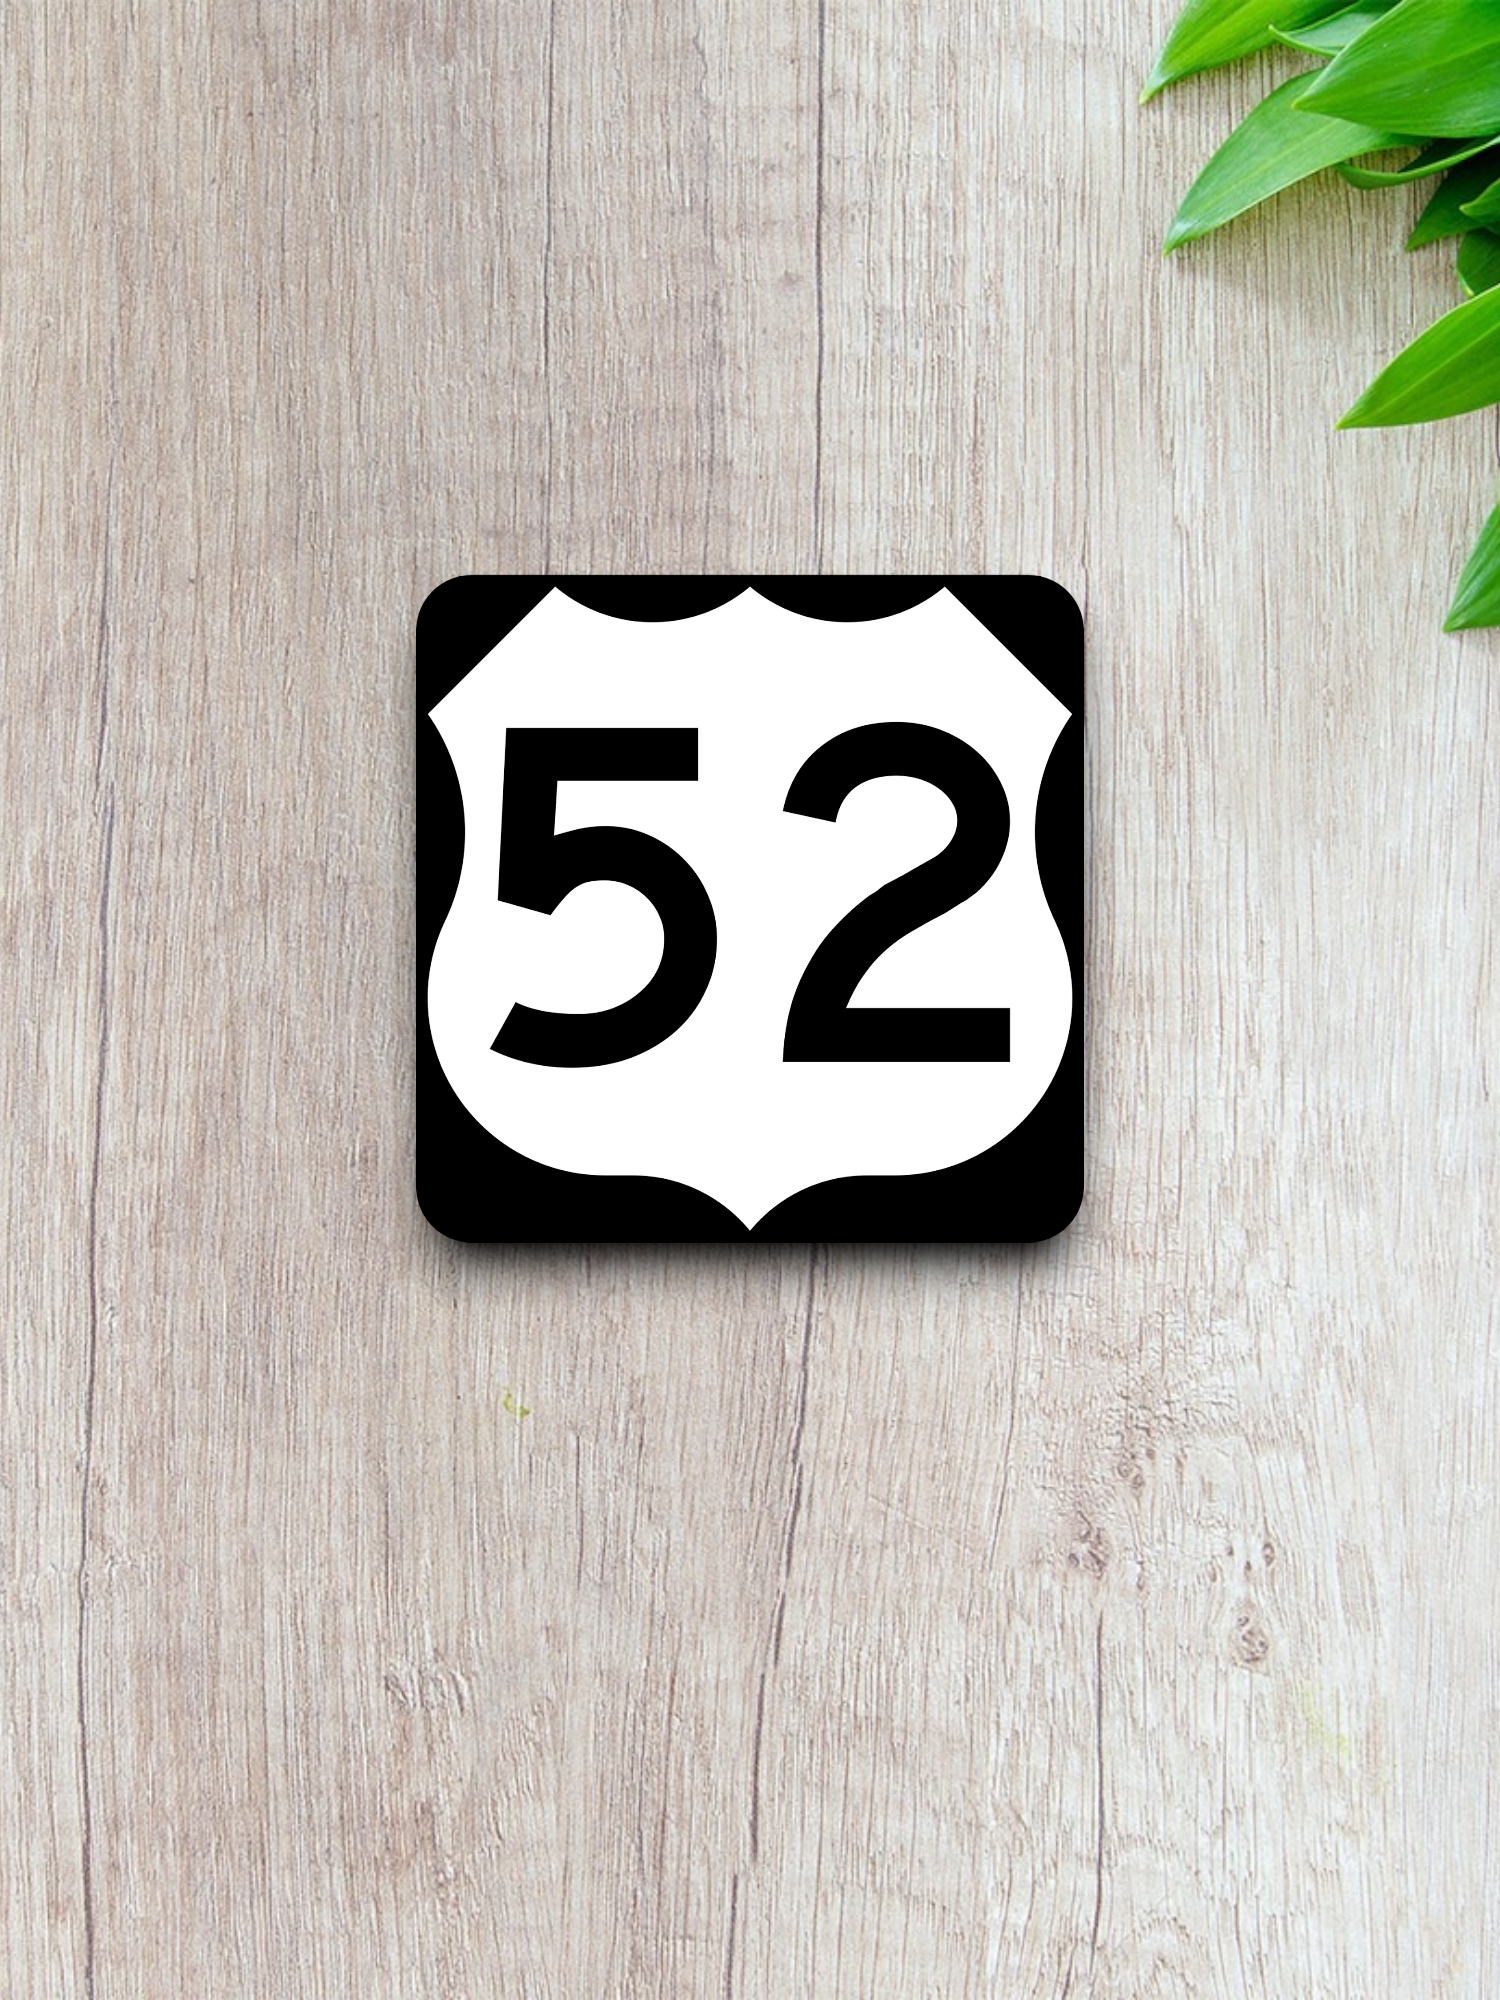 U.S. Route 52 Road Sign Sticker